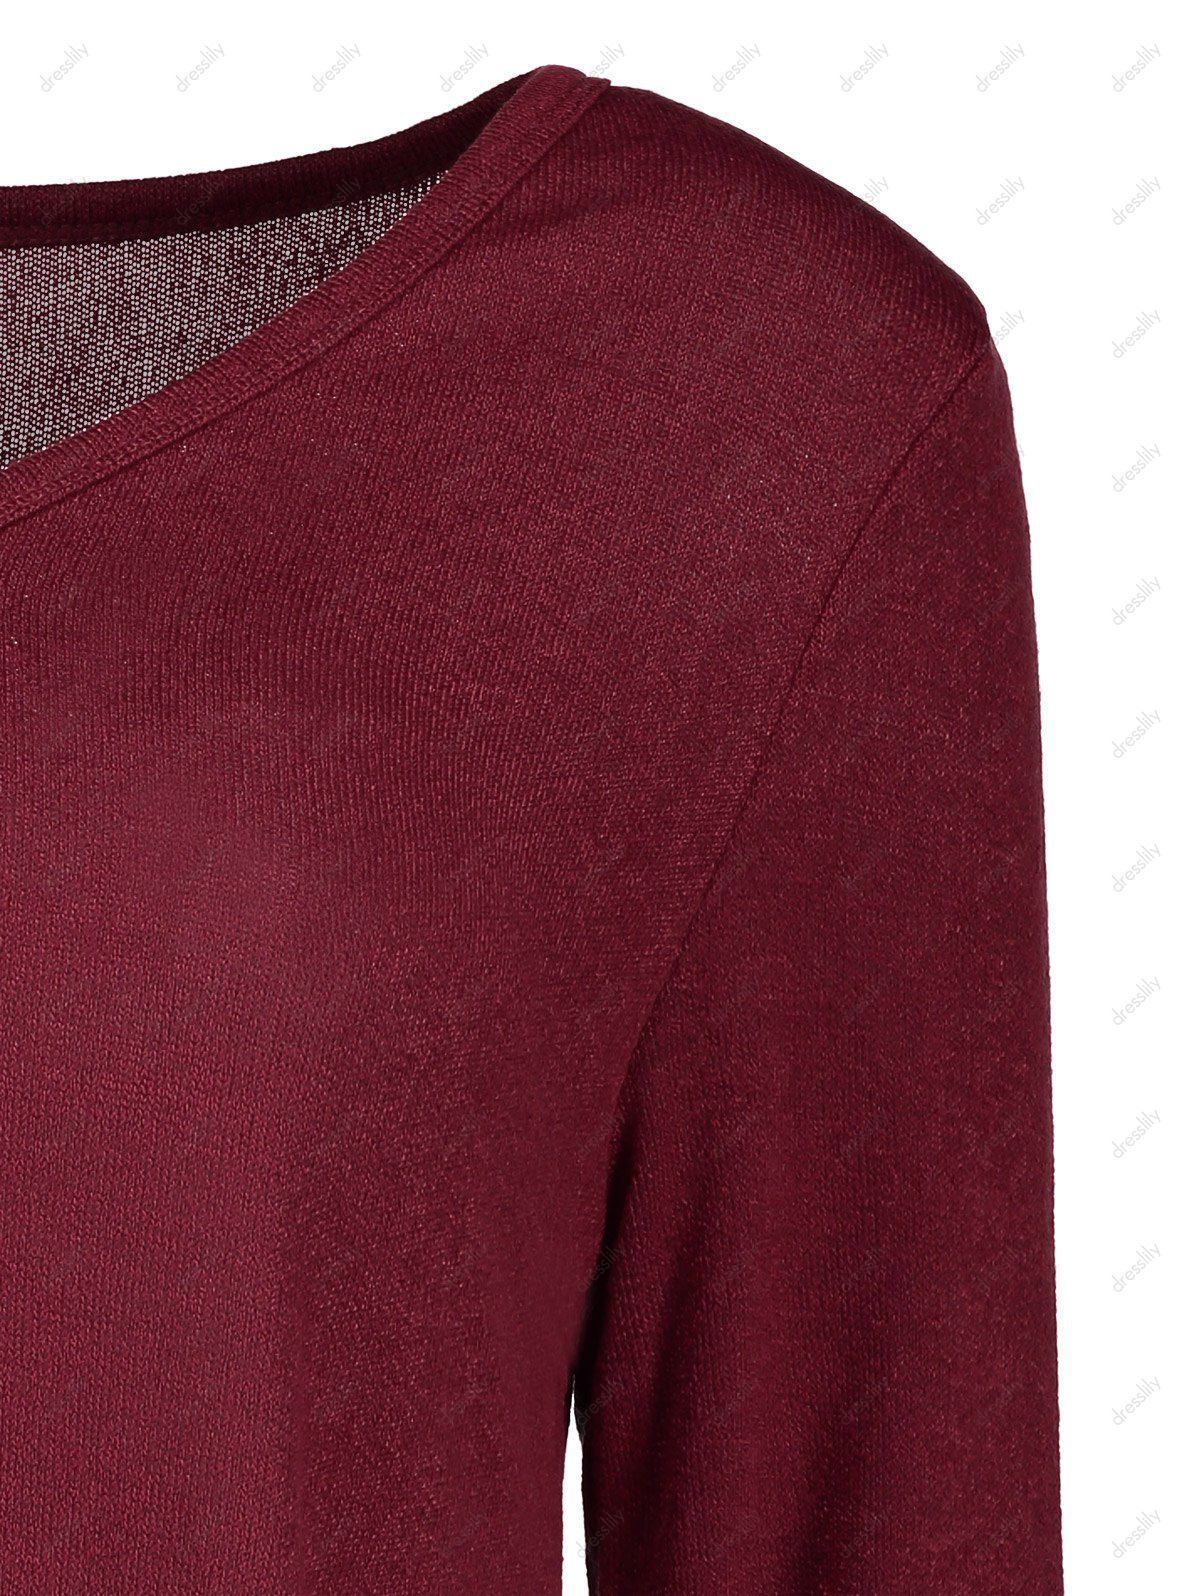 [25% OFF] 2020 V-Neck Long Sleeve Asymmetric Dress In WINE RED | DressLily